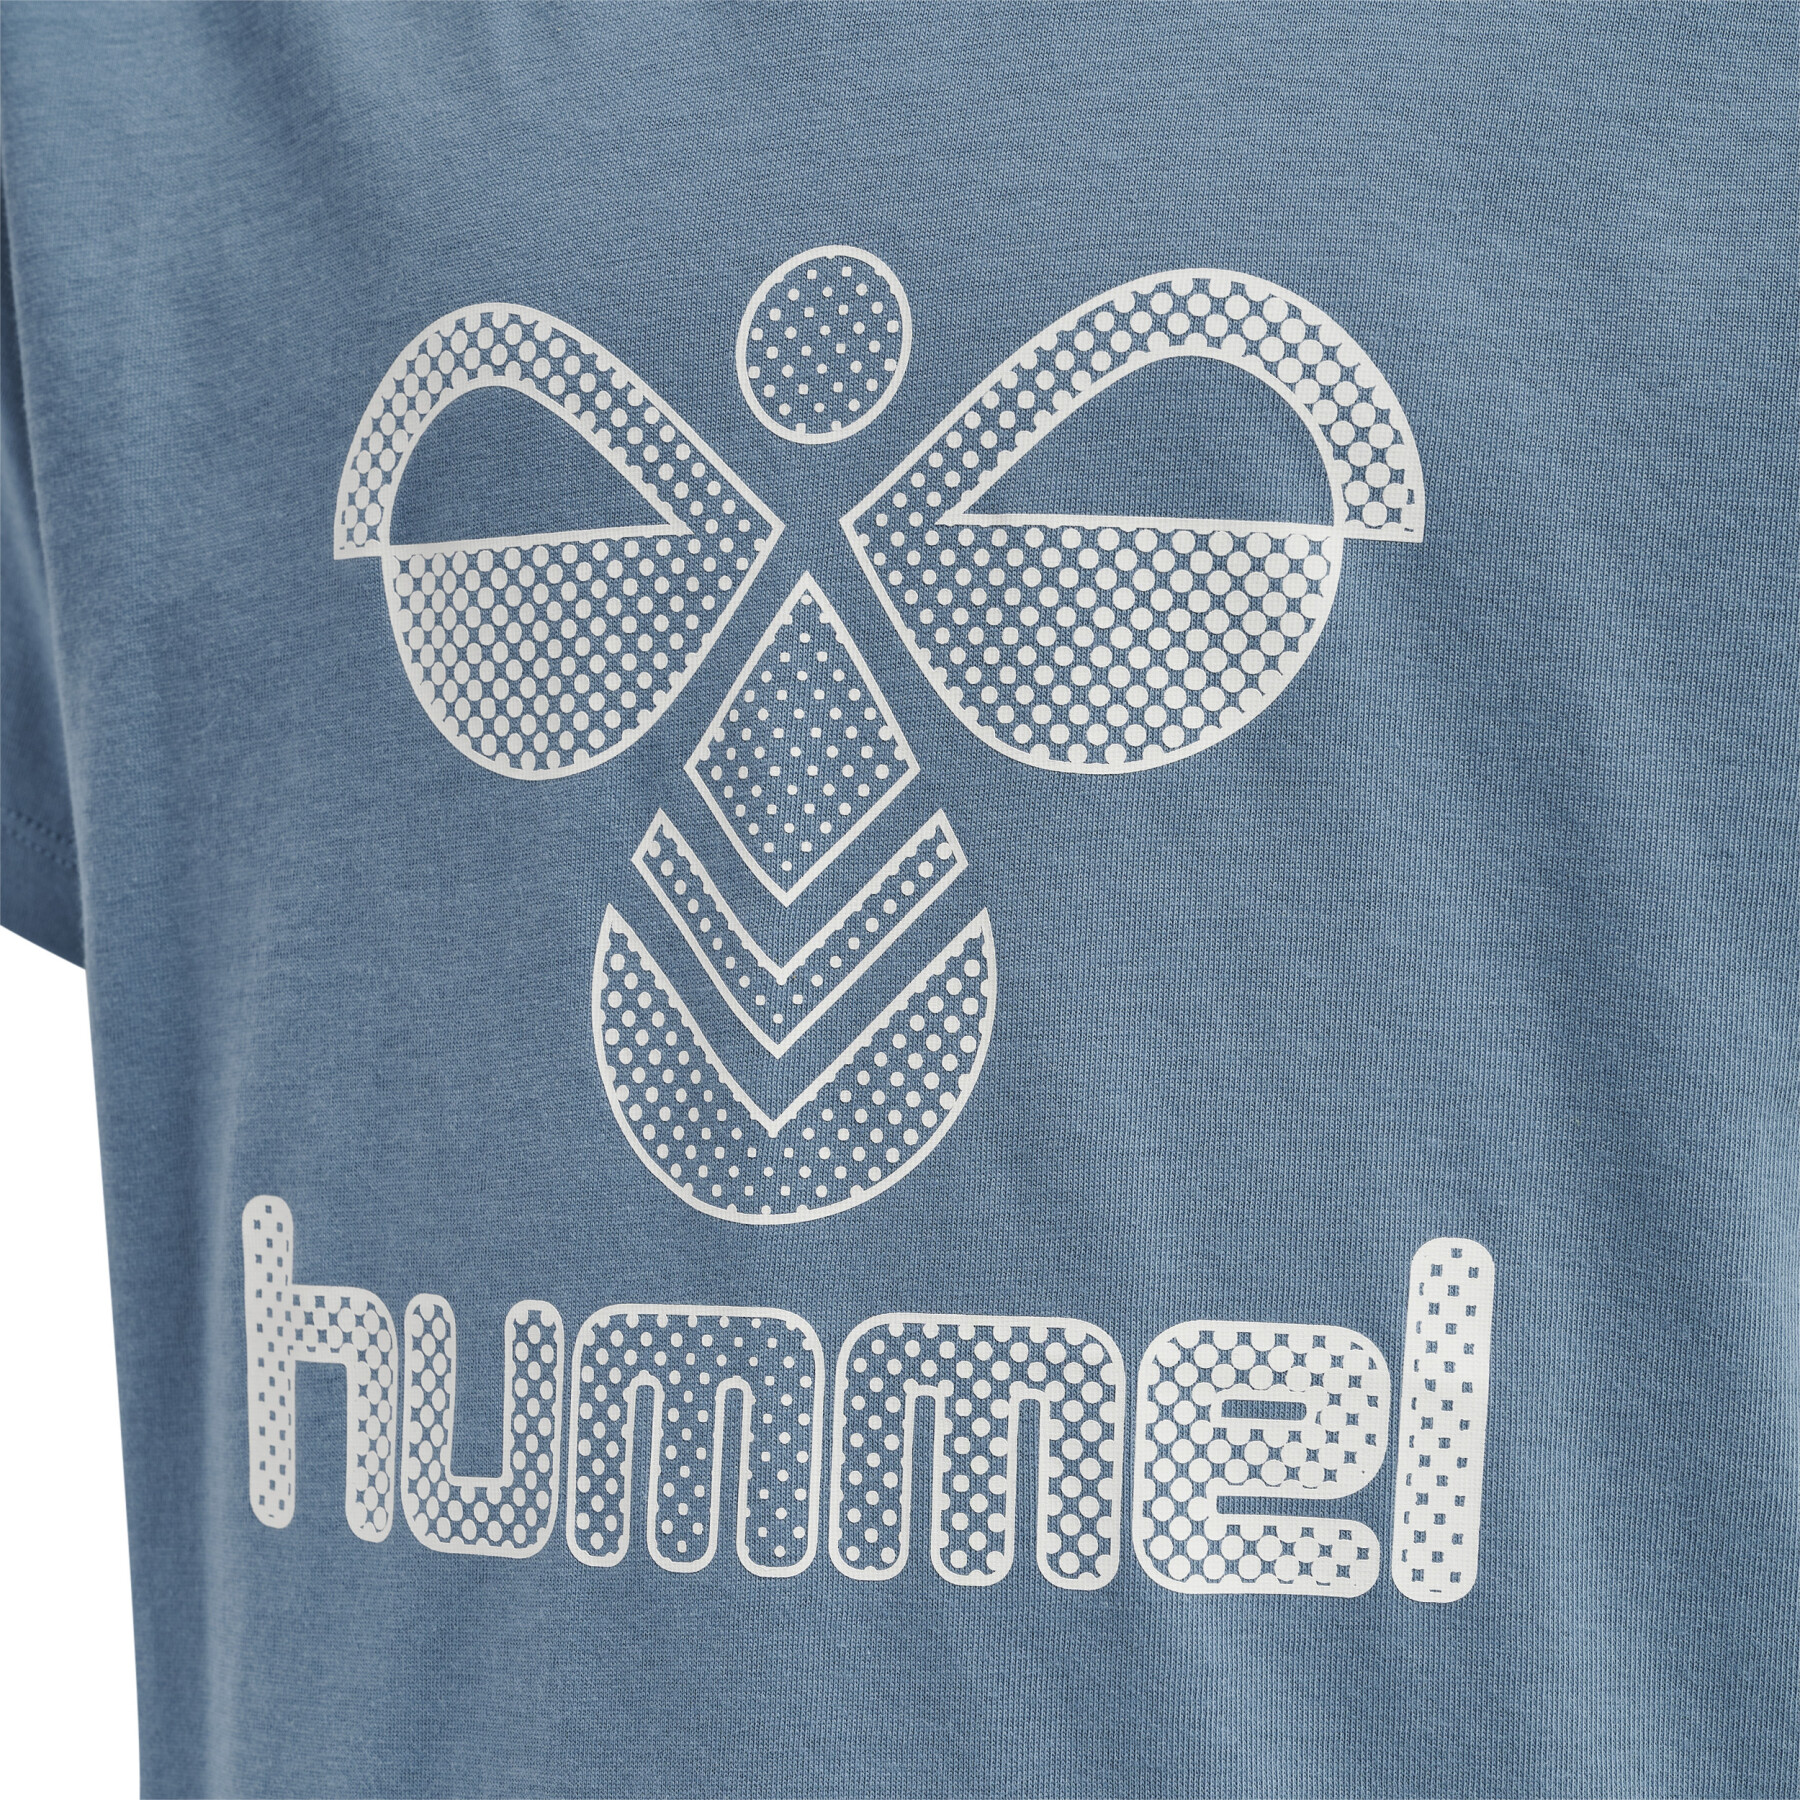 T-shirt de criança Hummel Proud